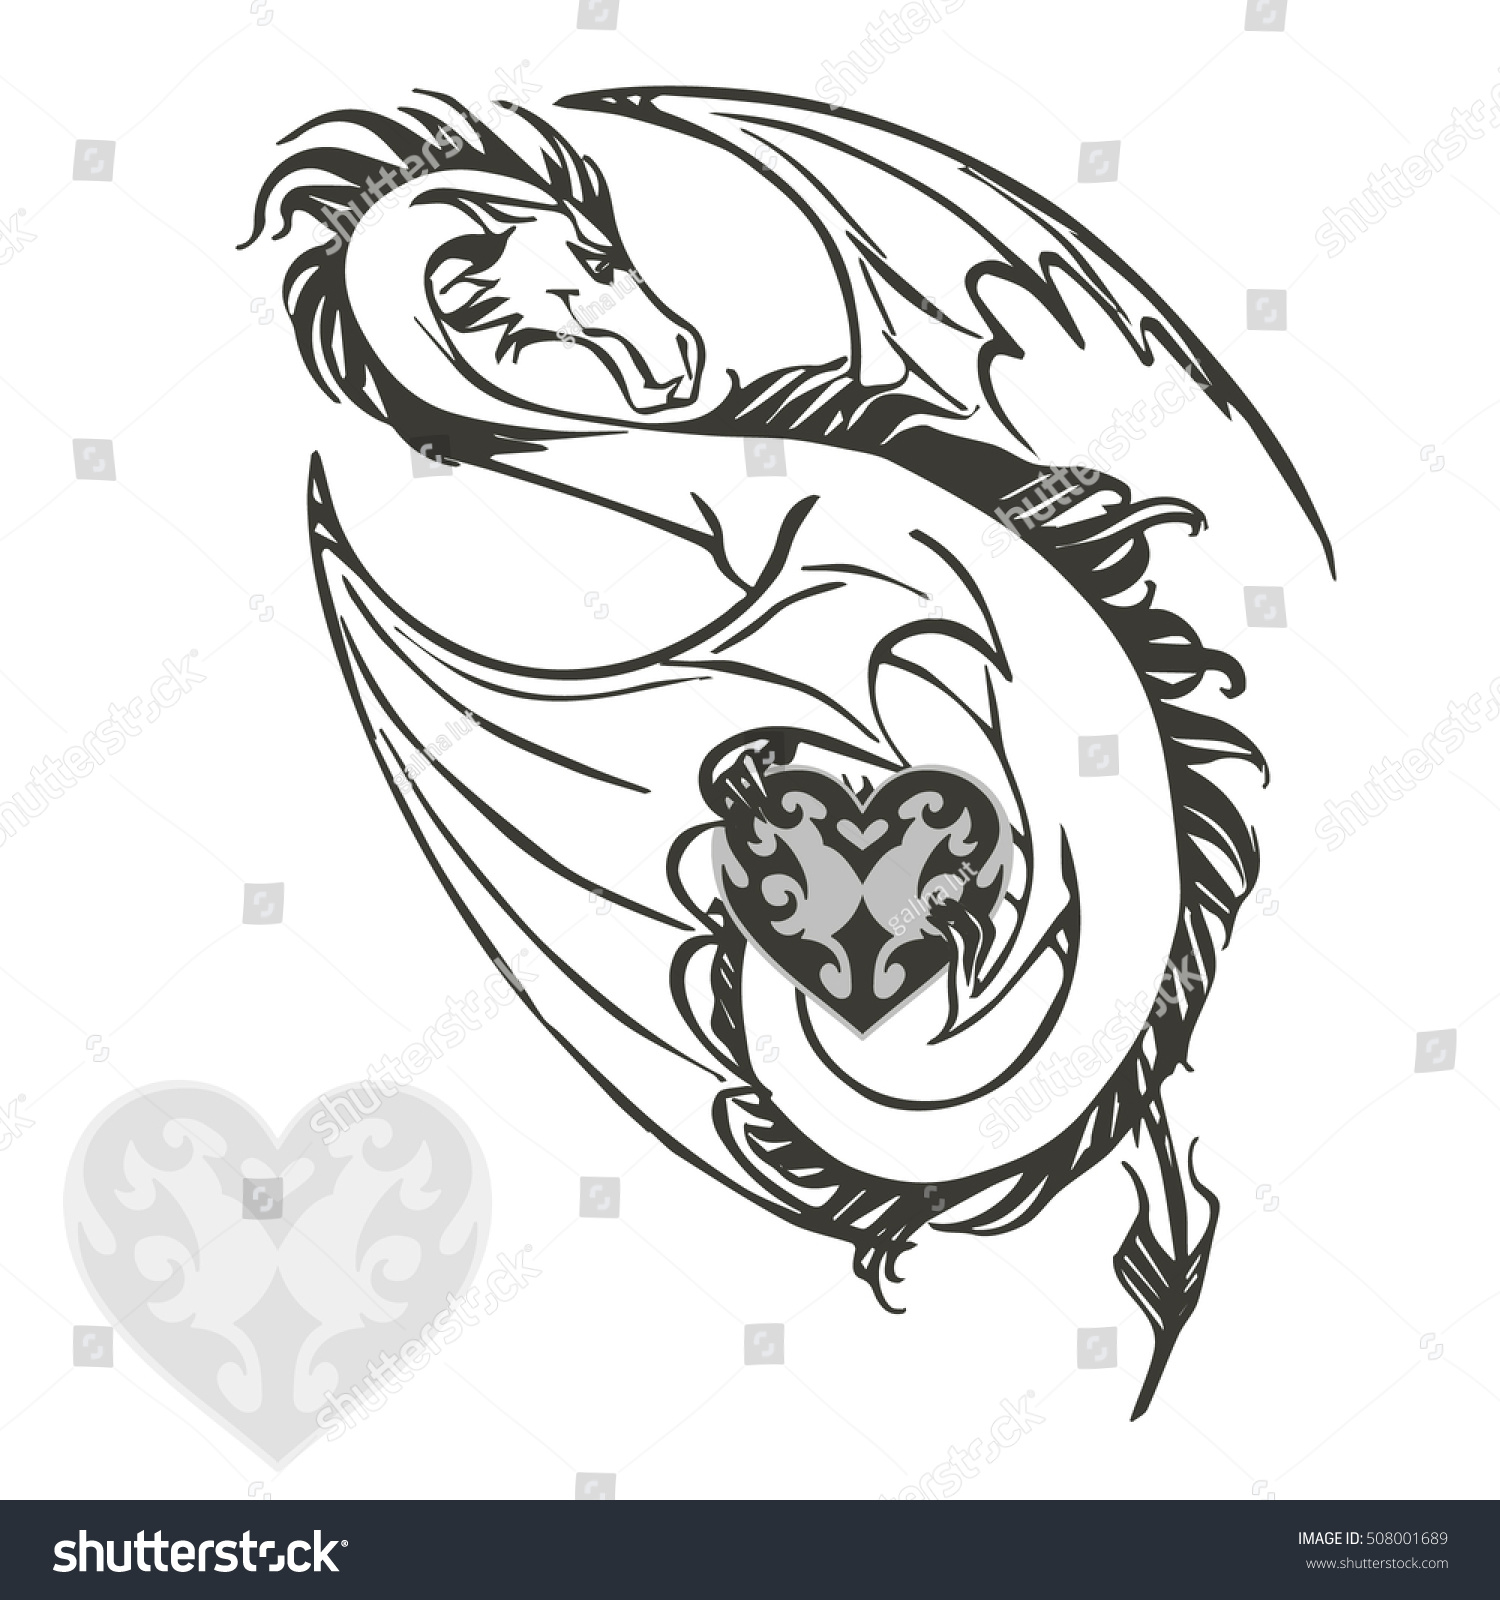 Dragon Heart Tattoo Print Vector Stock Vector Royalty Free 508001689 Shutterstock